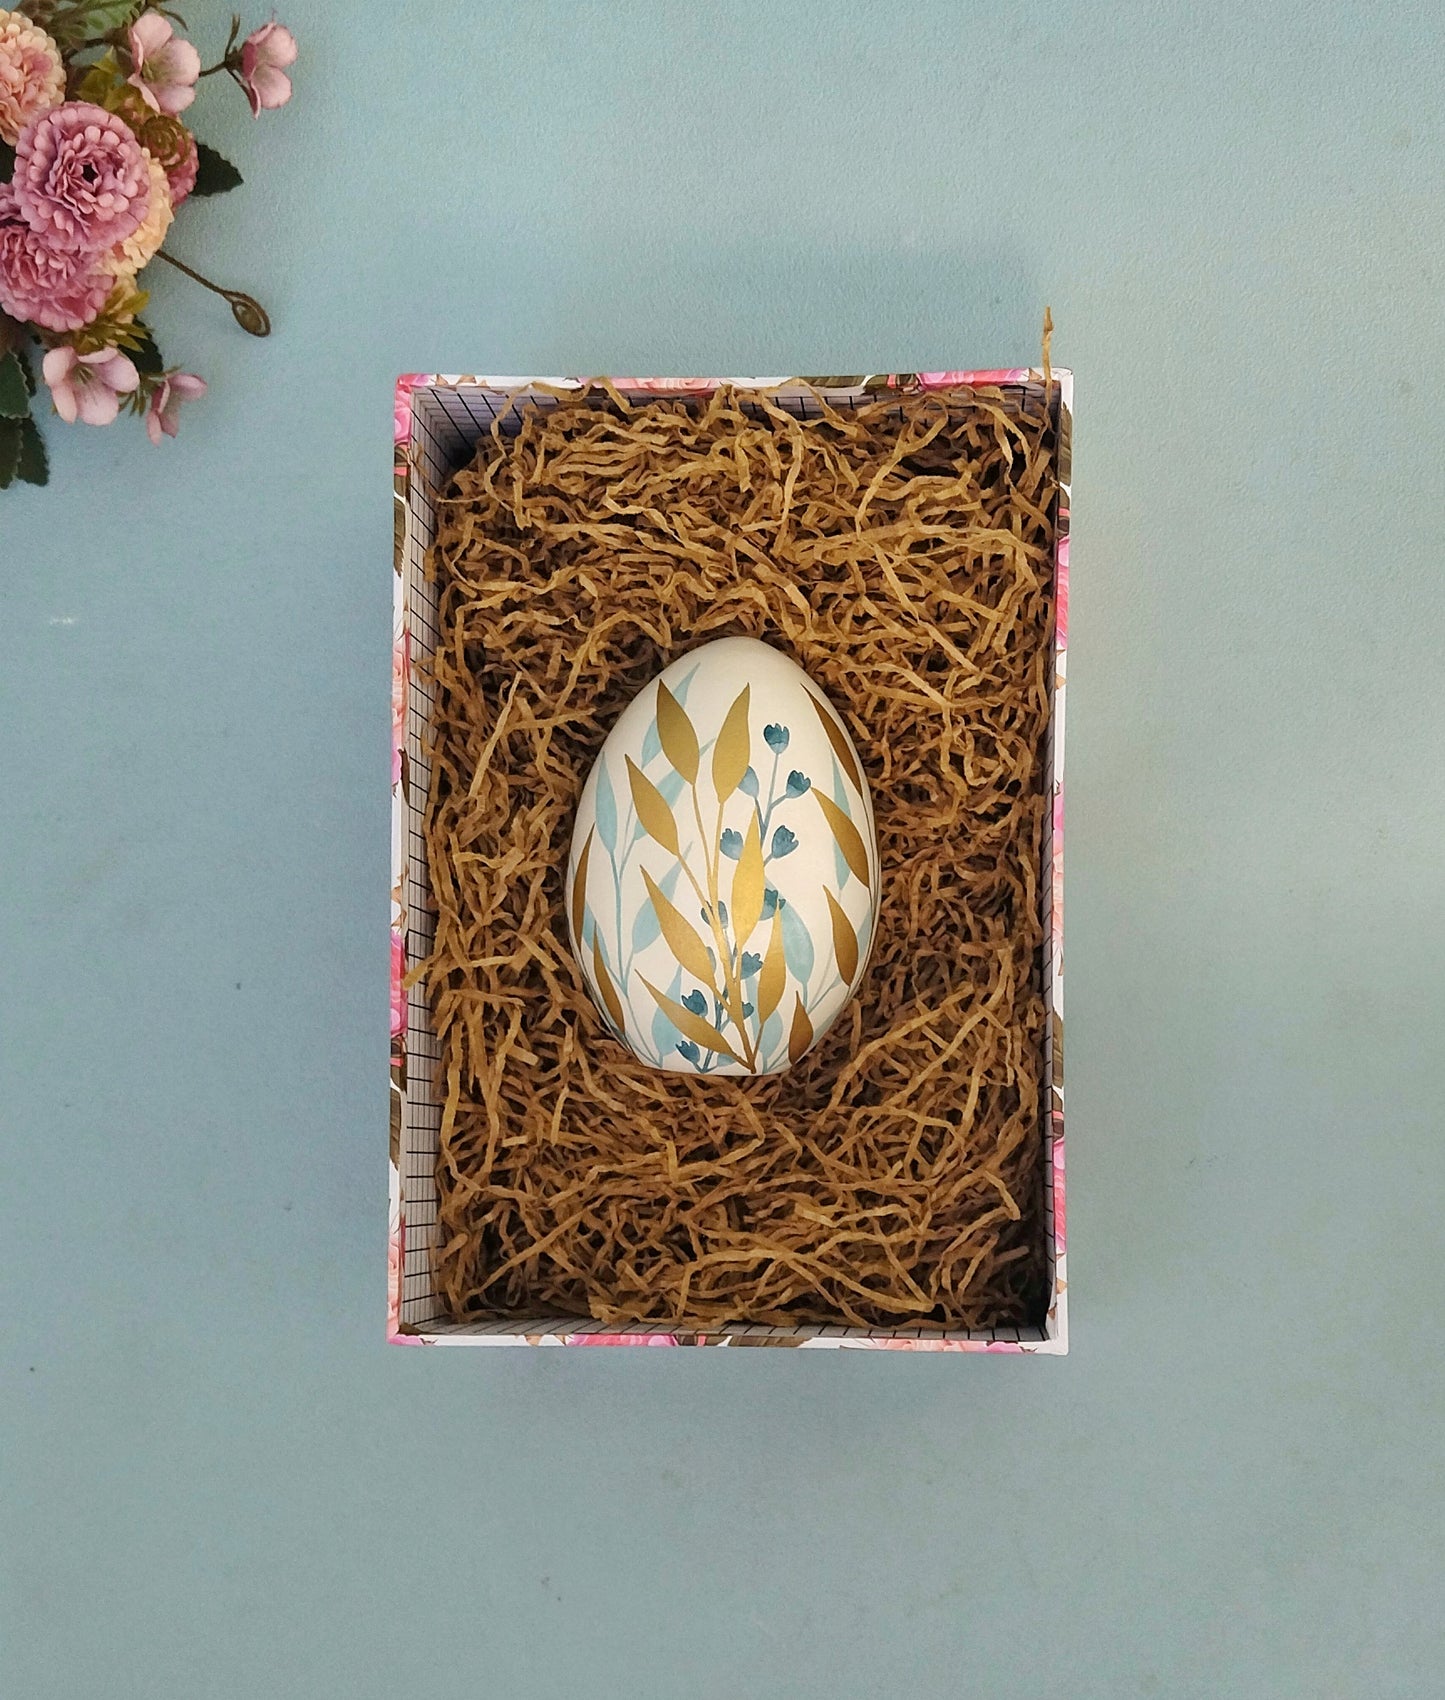 Ceramic Easter Egg With Golden Leaves